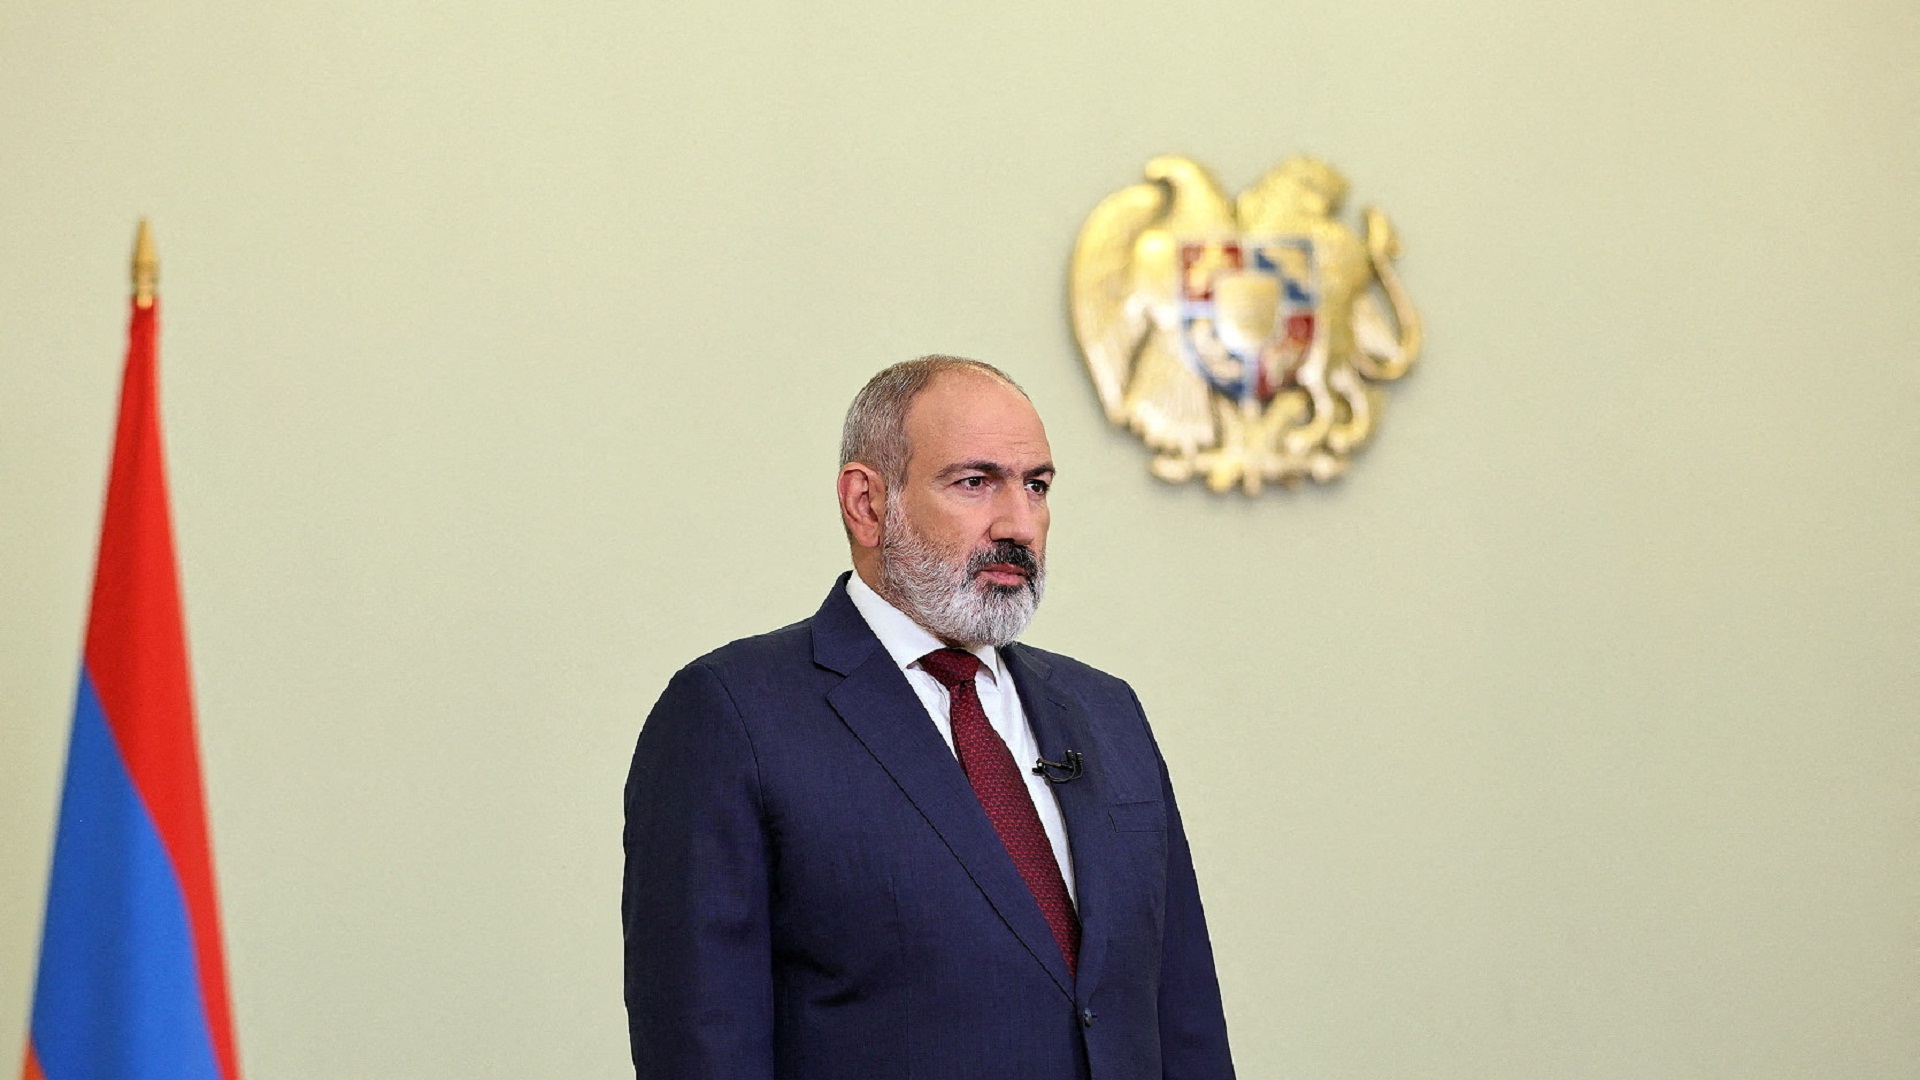 Tο πάγωμα της συμμετοχής της Αρμενίας στον ρωσικό οργανισμό ασφαλείας ανακοίνωσε ο Πασινιάν!